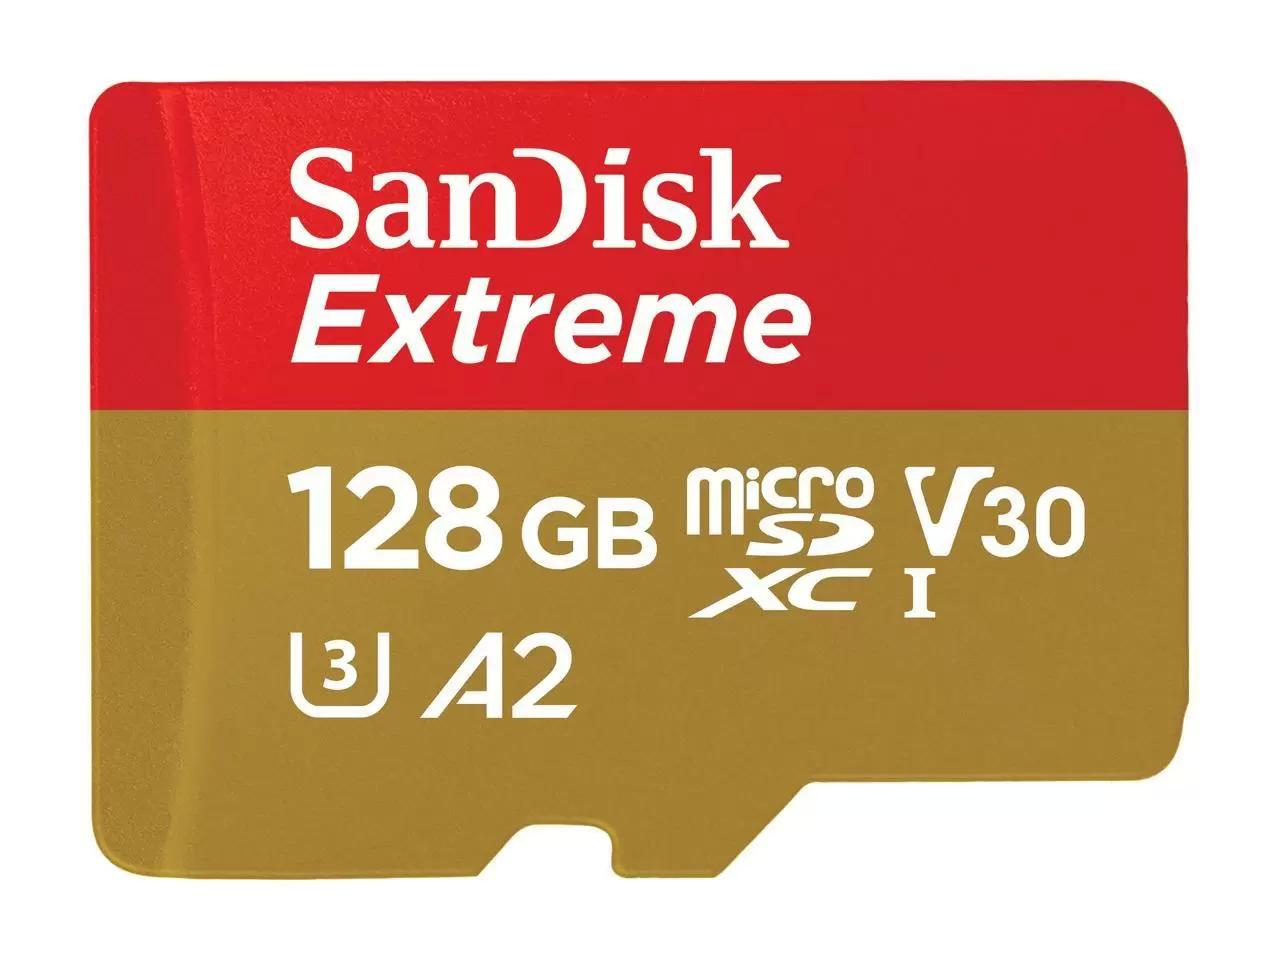 SanDisk 128GB Extreme U3 A2 V30 microSD Memory Card for $12.44